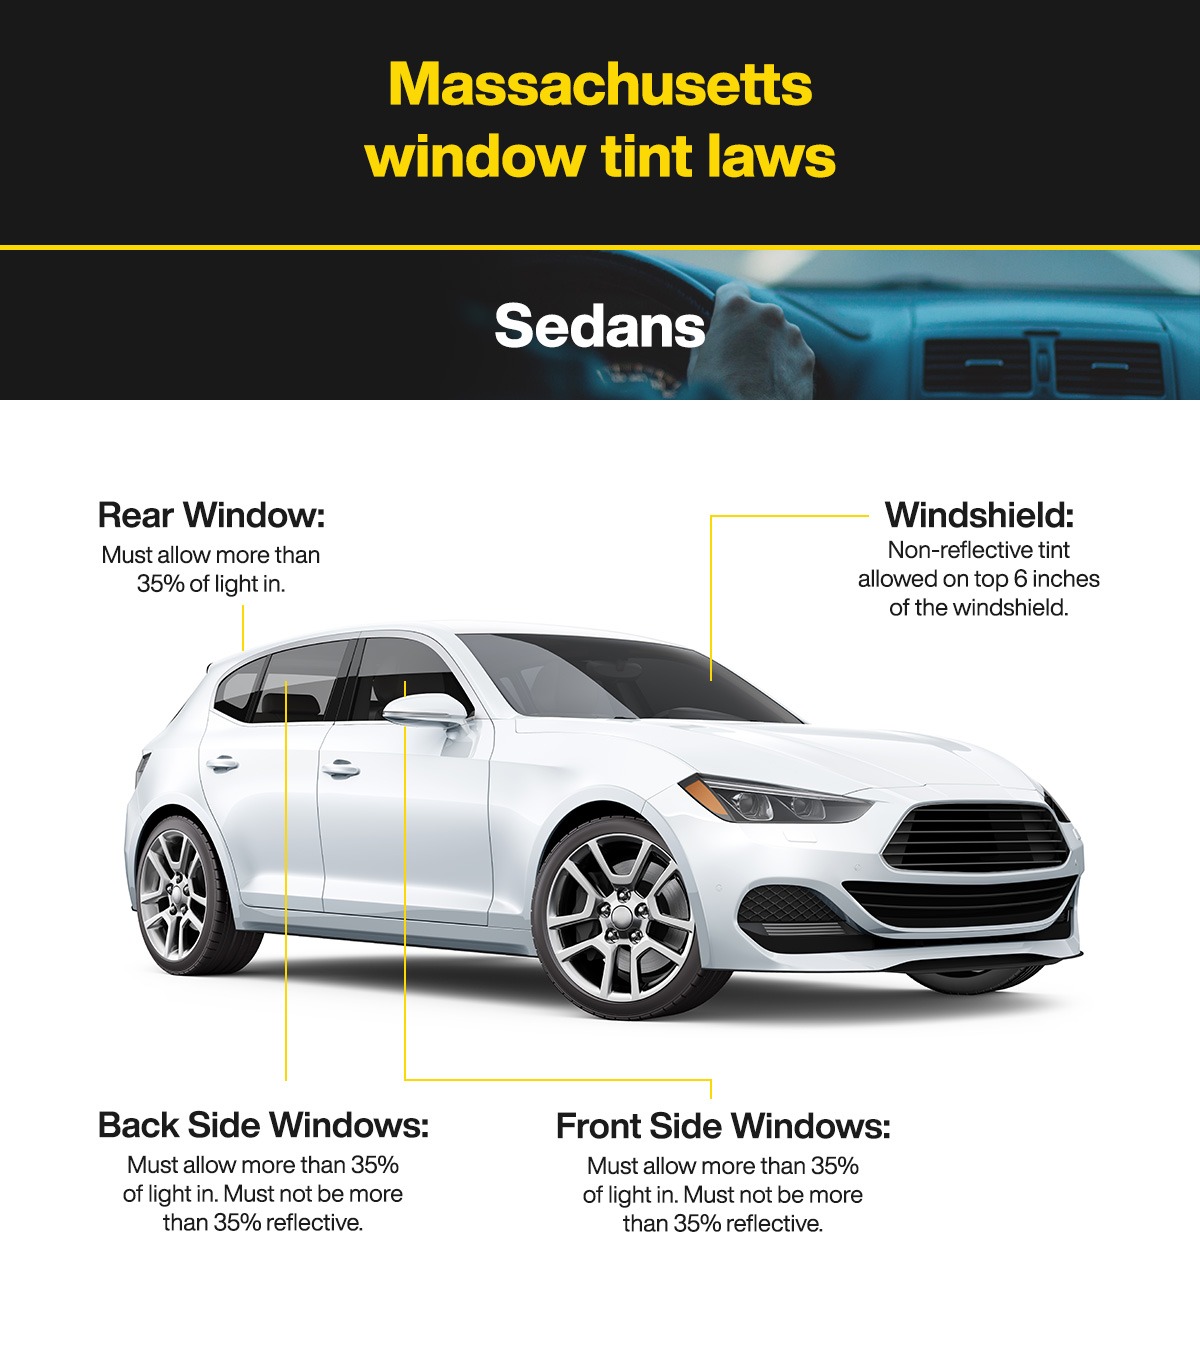 Tint Regulations in Massachussets for Sedans